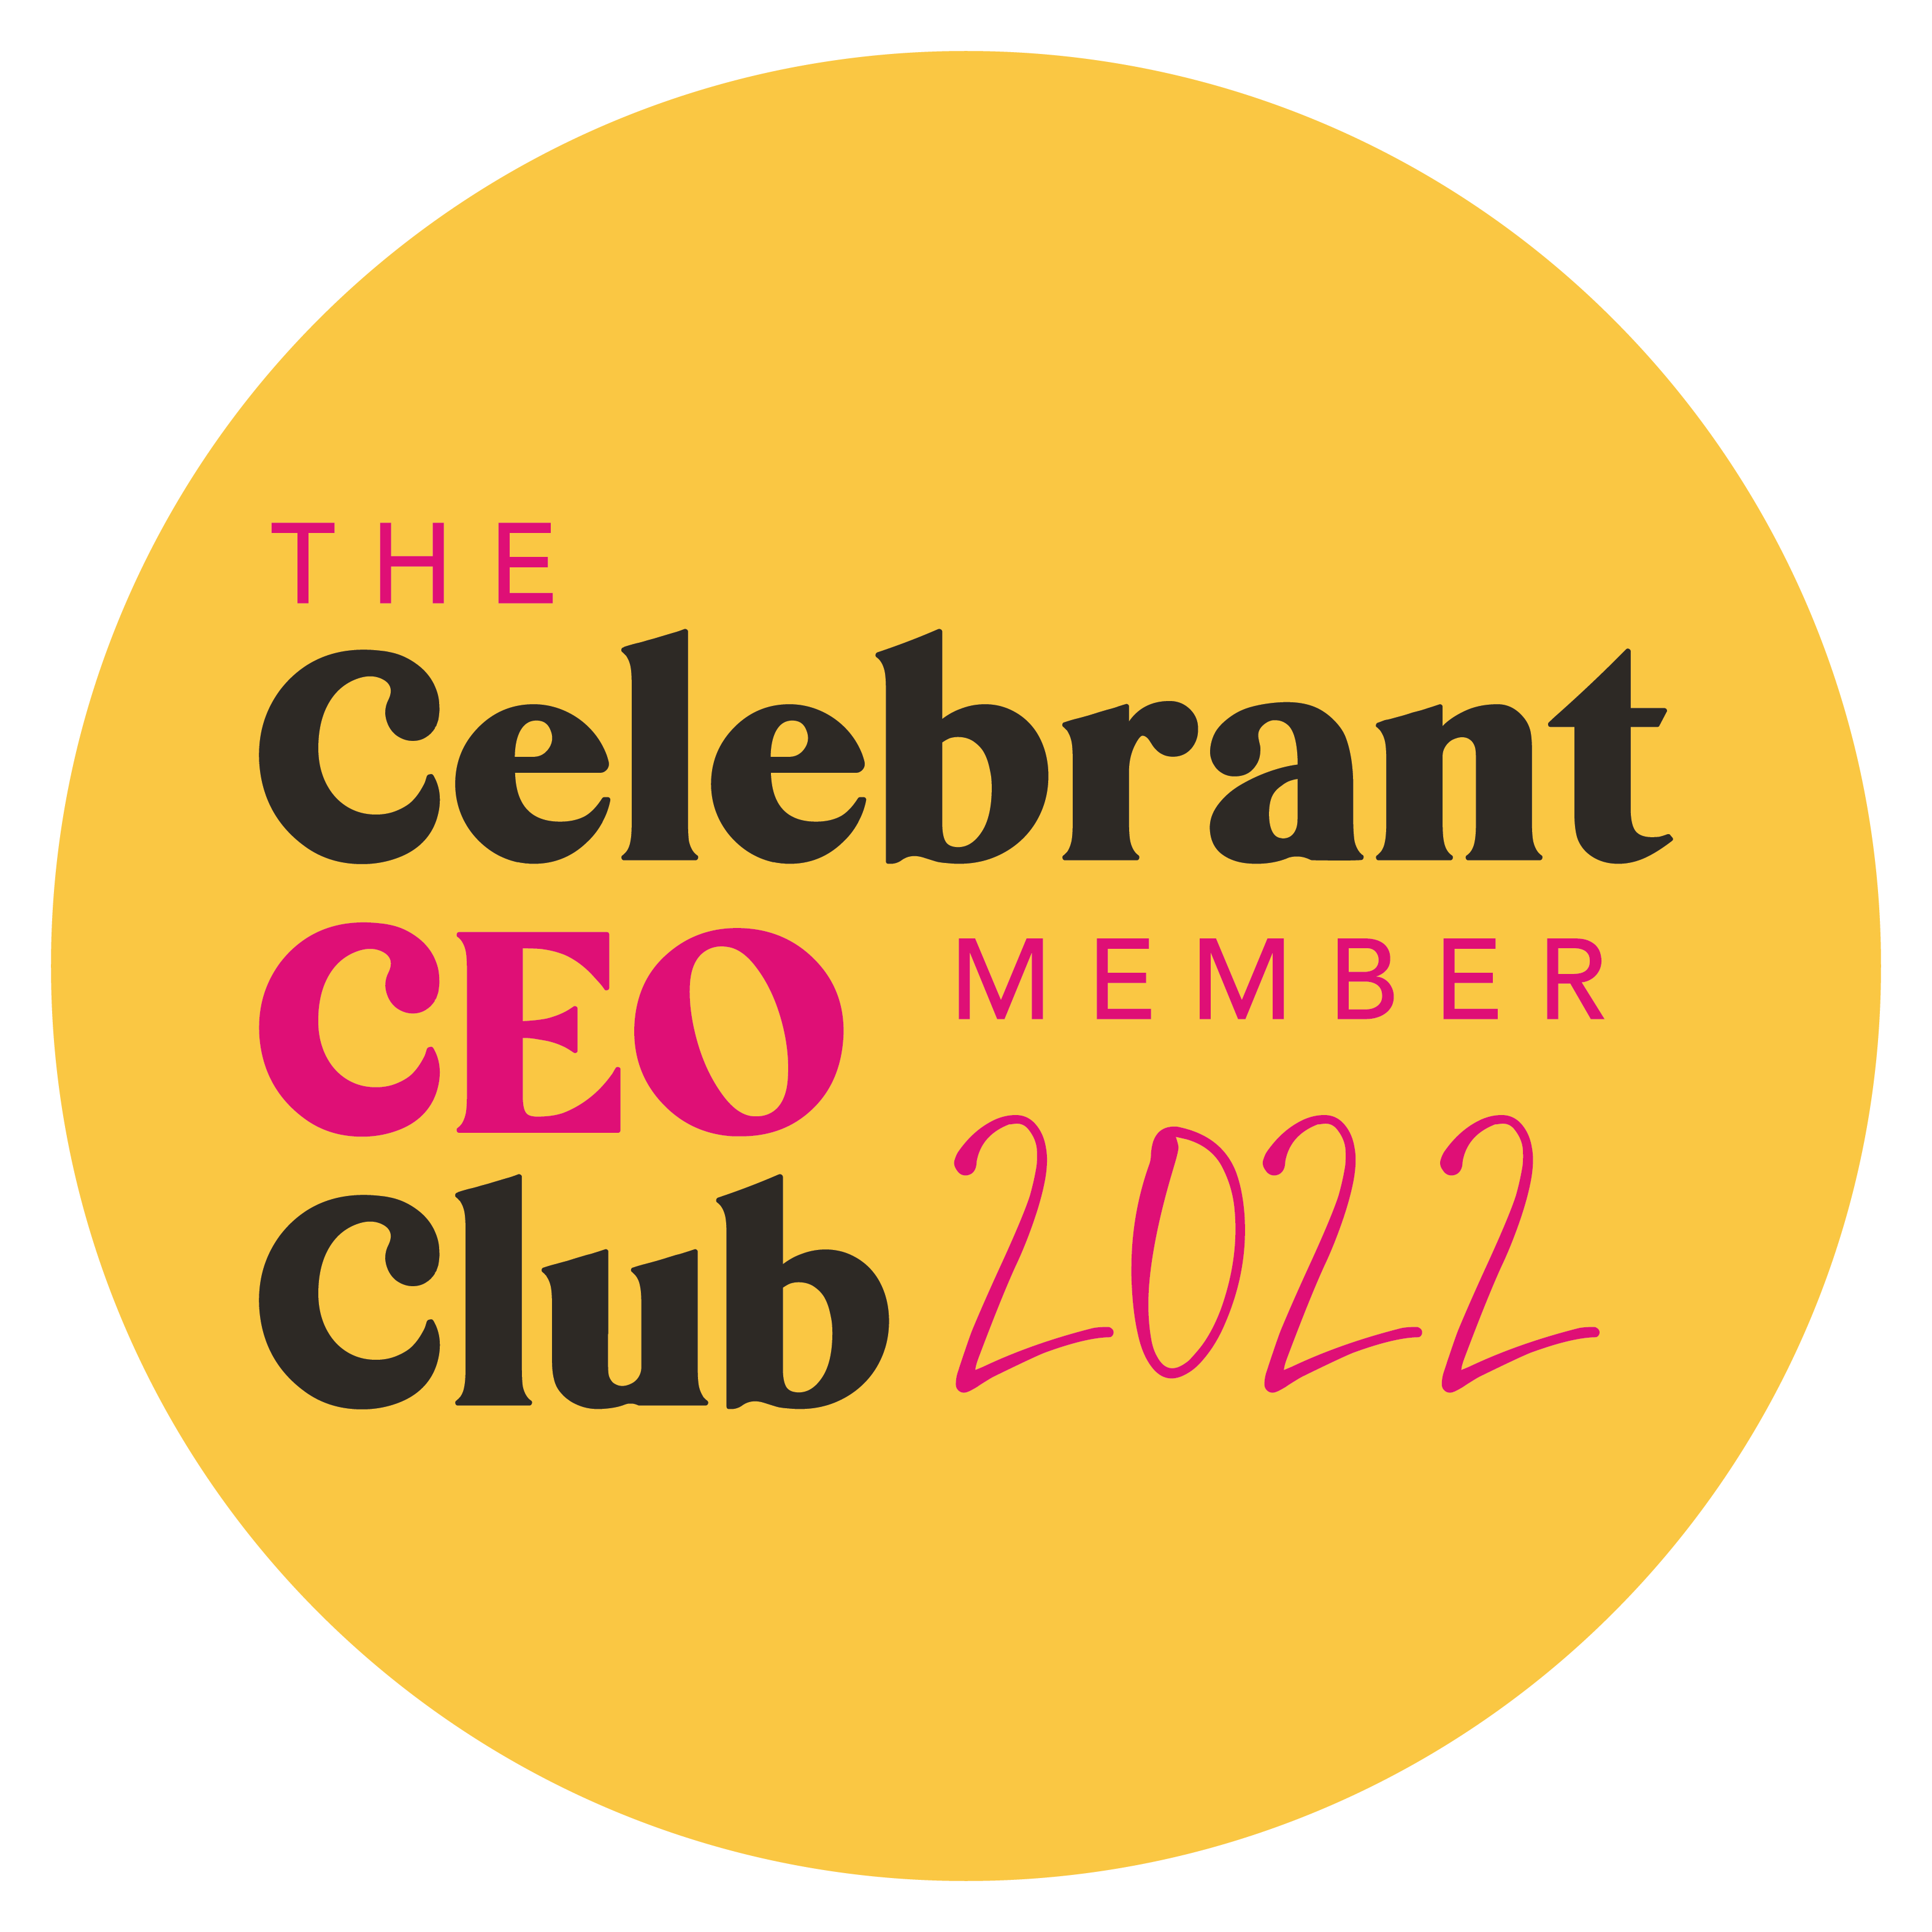 Membership of Celebrant Community